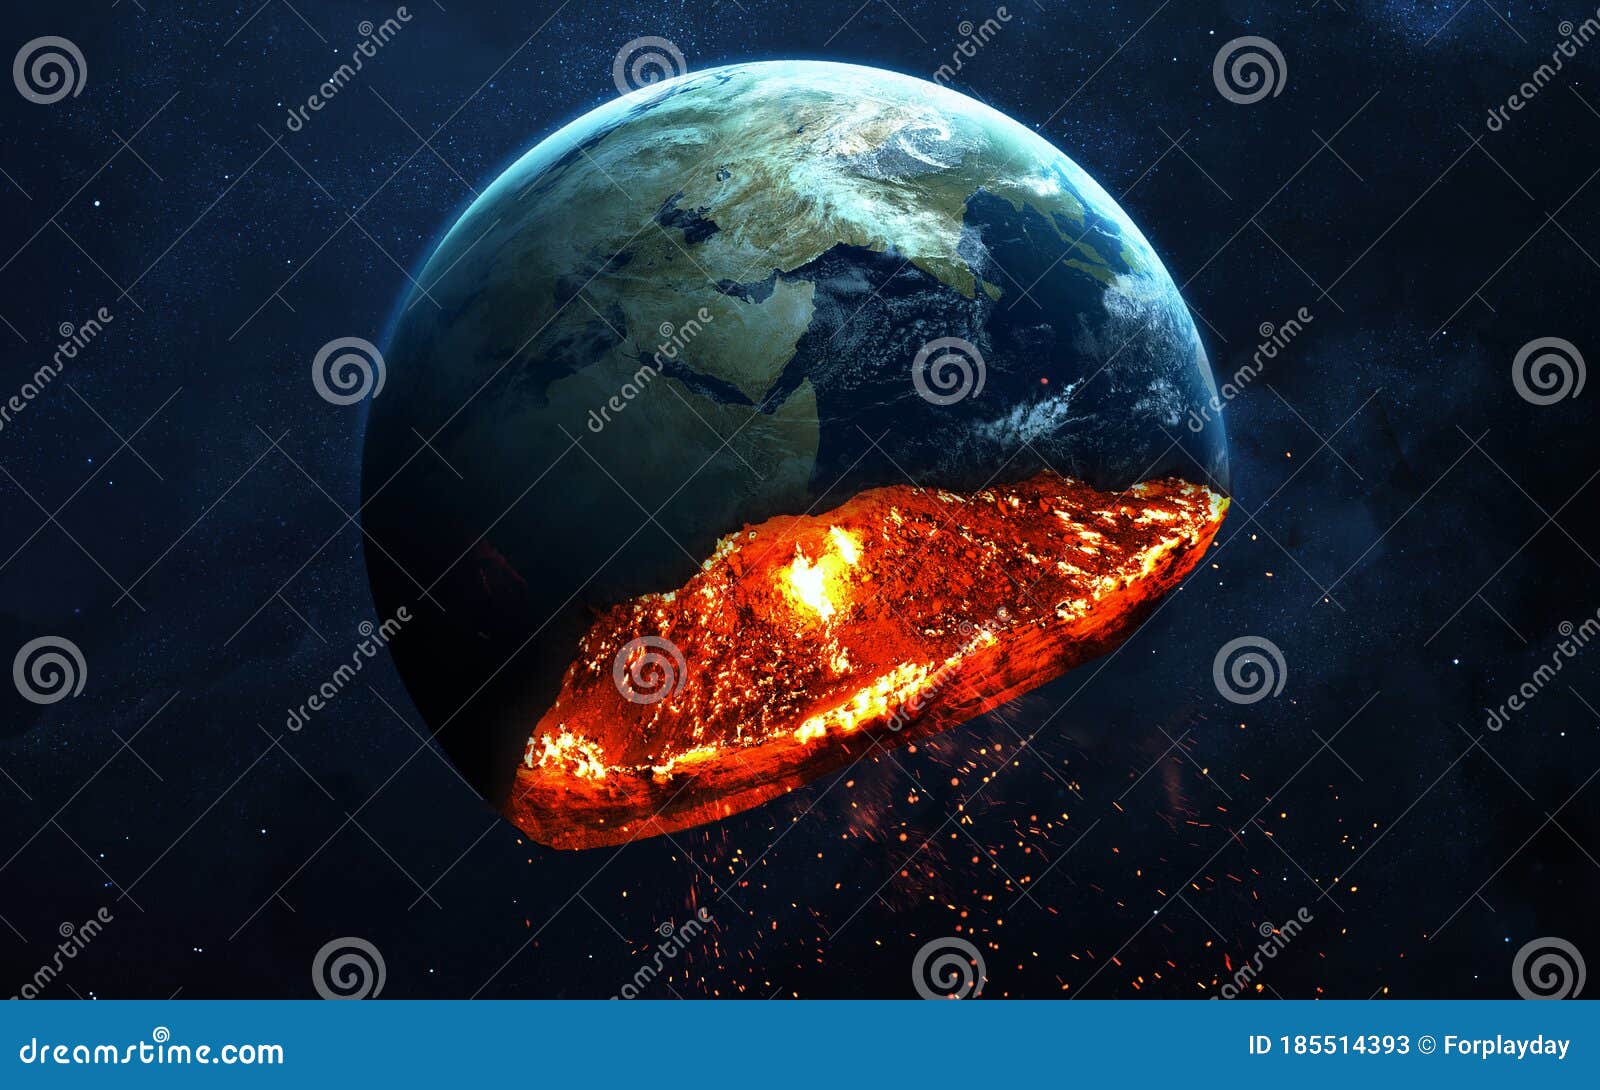 Explosion Of Earth Planet Royalty Free Illustration Cartoondealer Com